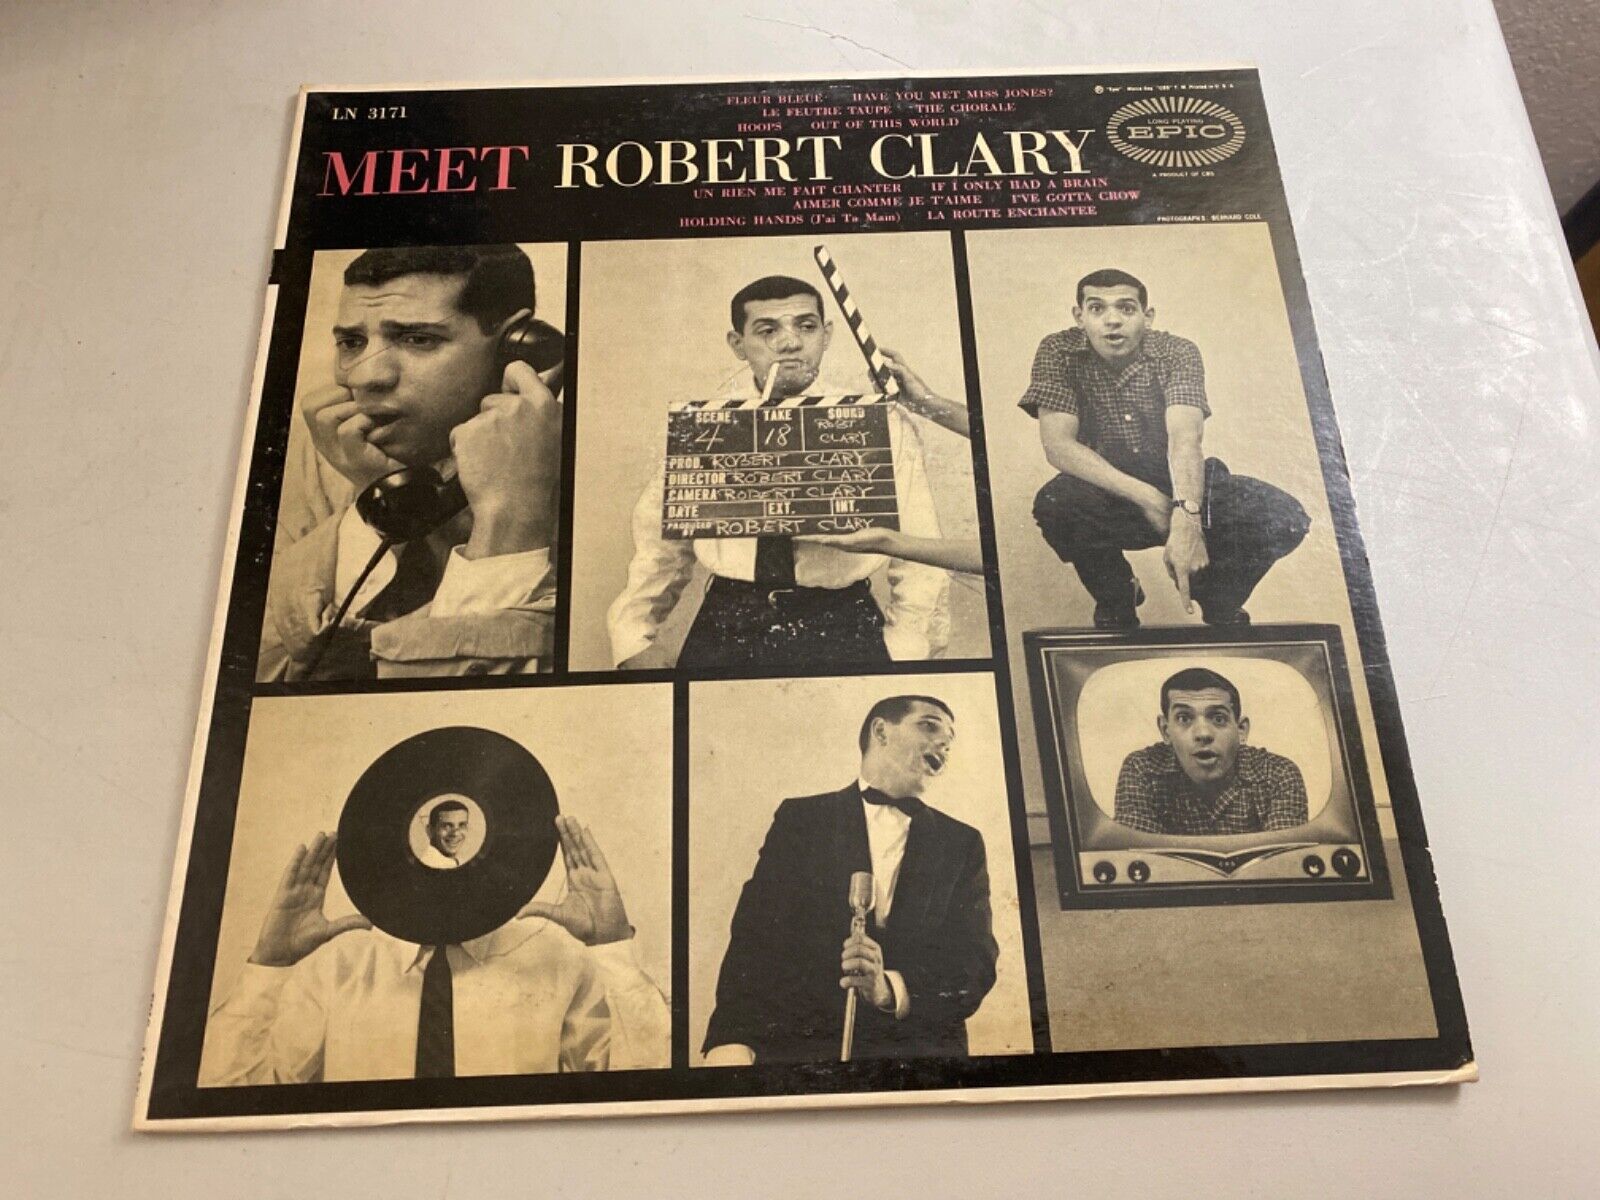 ROBERT CLARY – MEET ROBERT CLARY VINYL LP RECORD ALBUM PROMO 1955 EPIC LN 3171